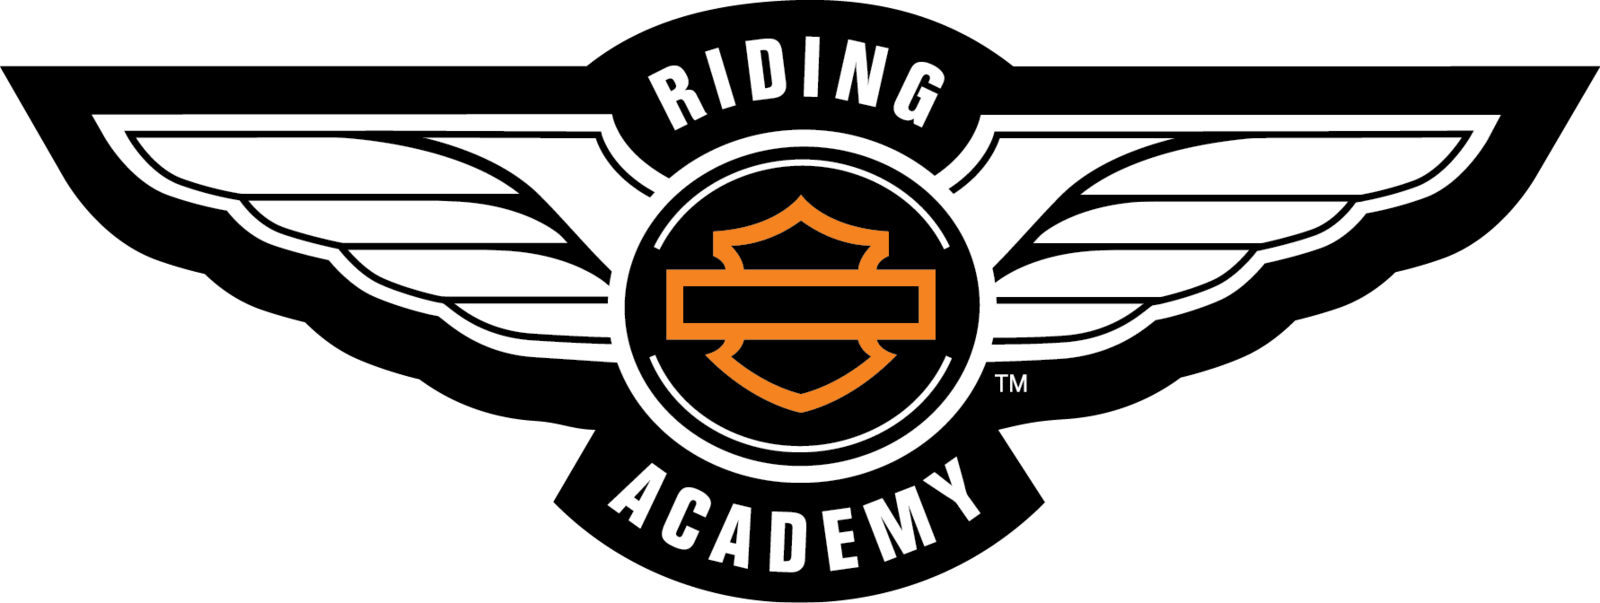 Harley Davidson Riding Academy Logo